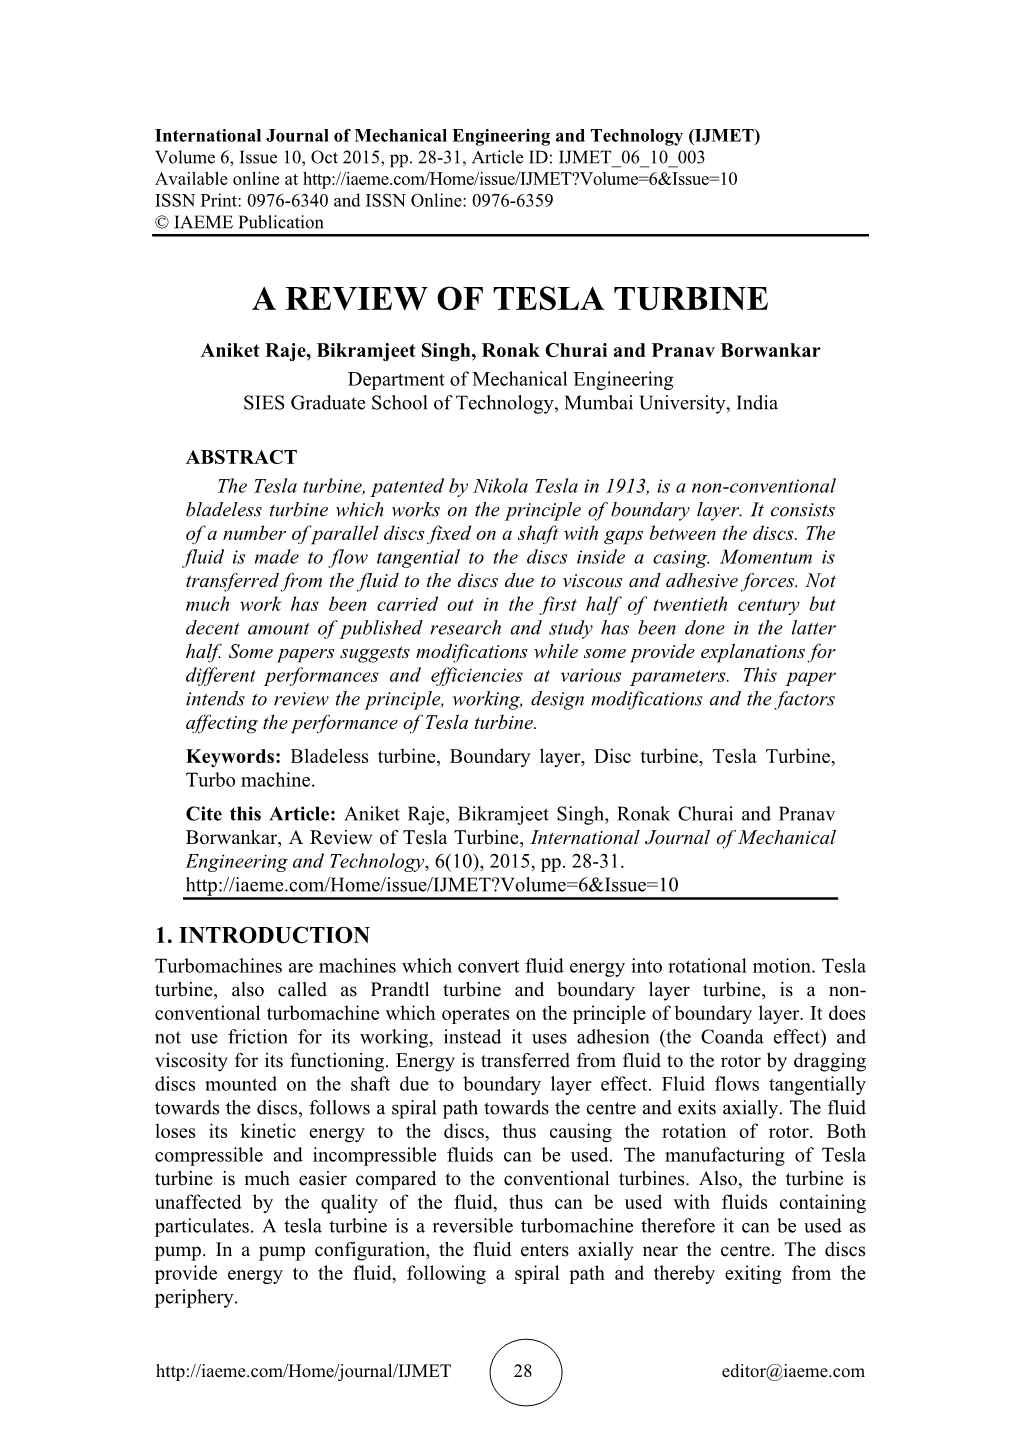 A Review of Tesla Turbine